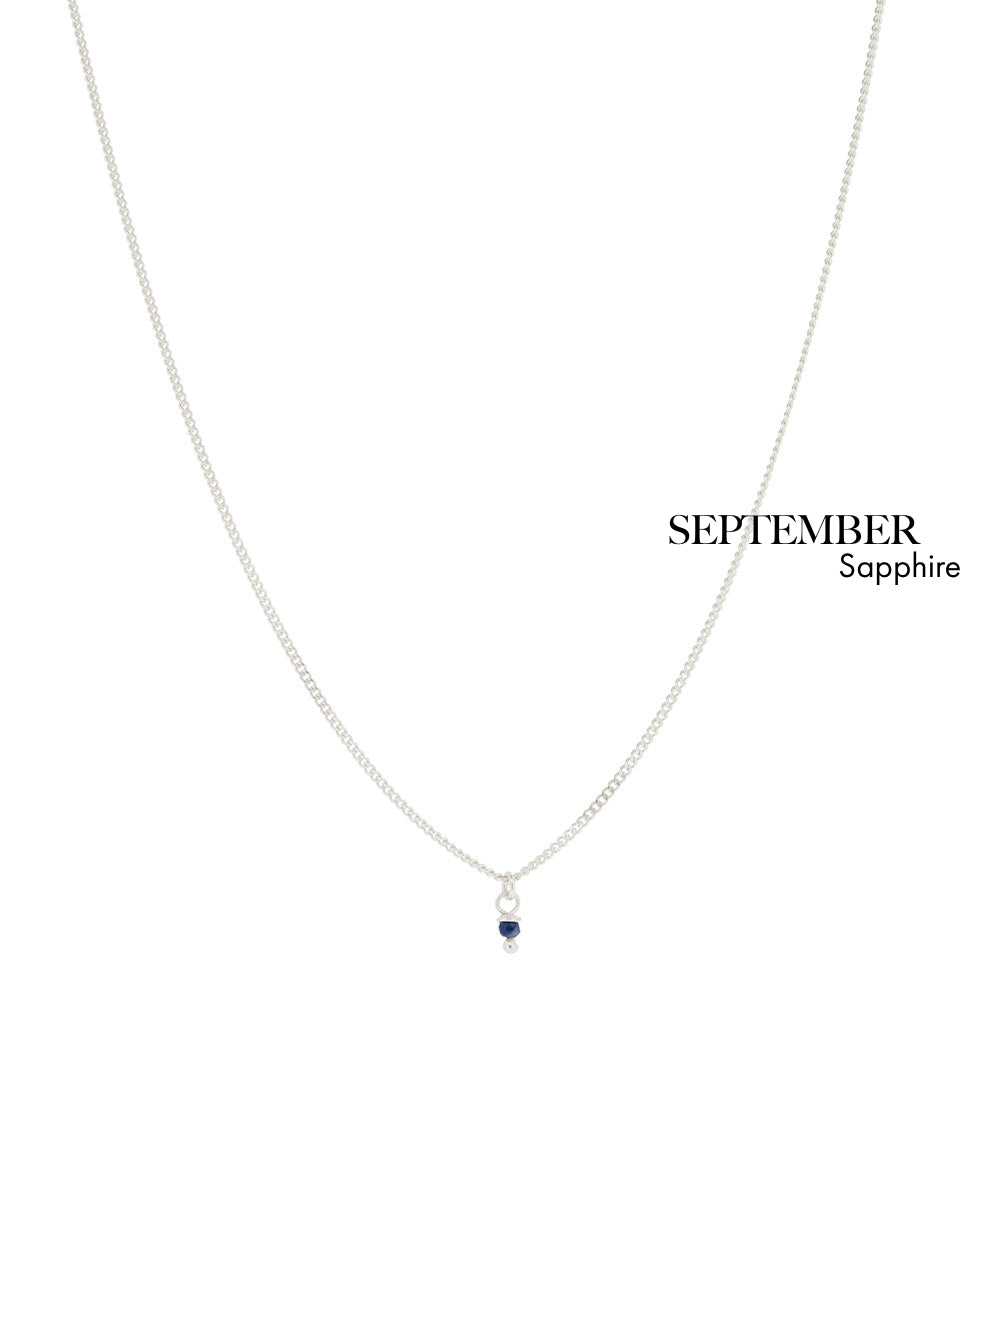 Birthstone September - Sapphire | 925 Sterling Silver